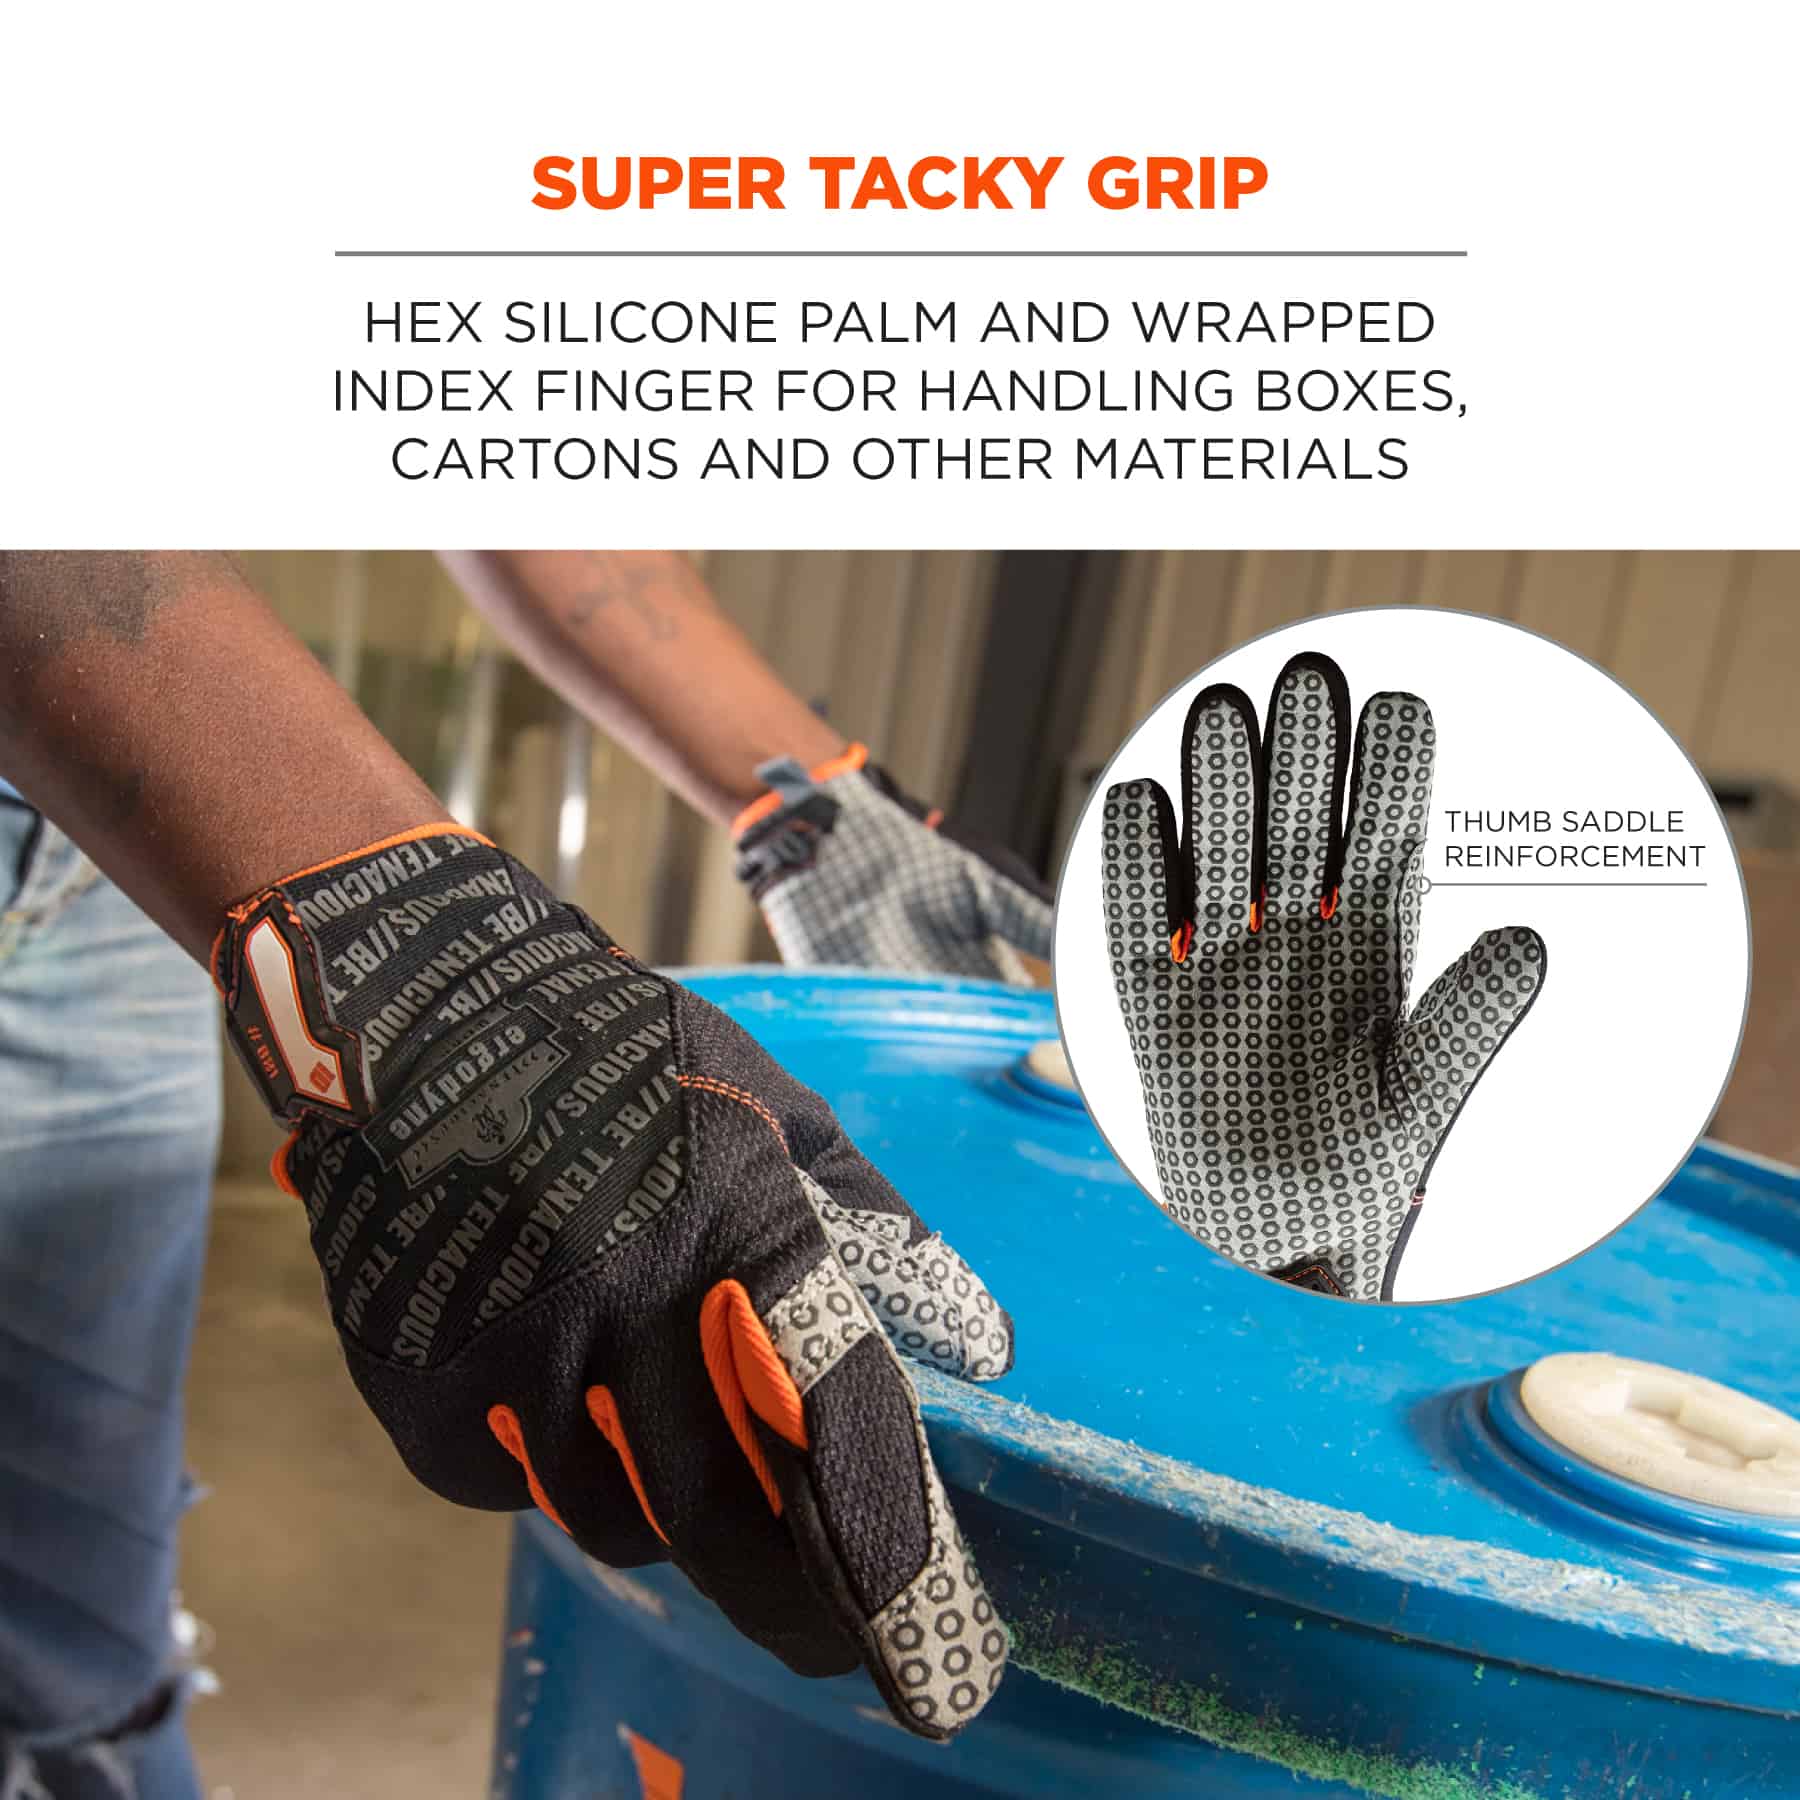 https://www.ergodyne.com/sites/default/files/product-images/17232-821-smooth-surface-handling-work-gloves-super-tacky-grip.jpg